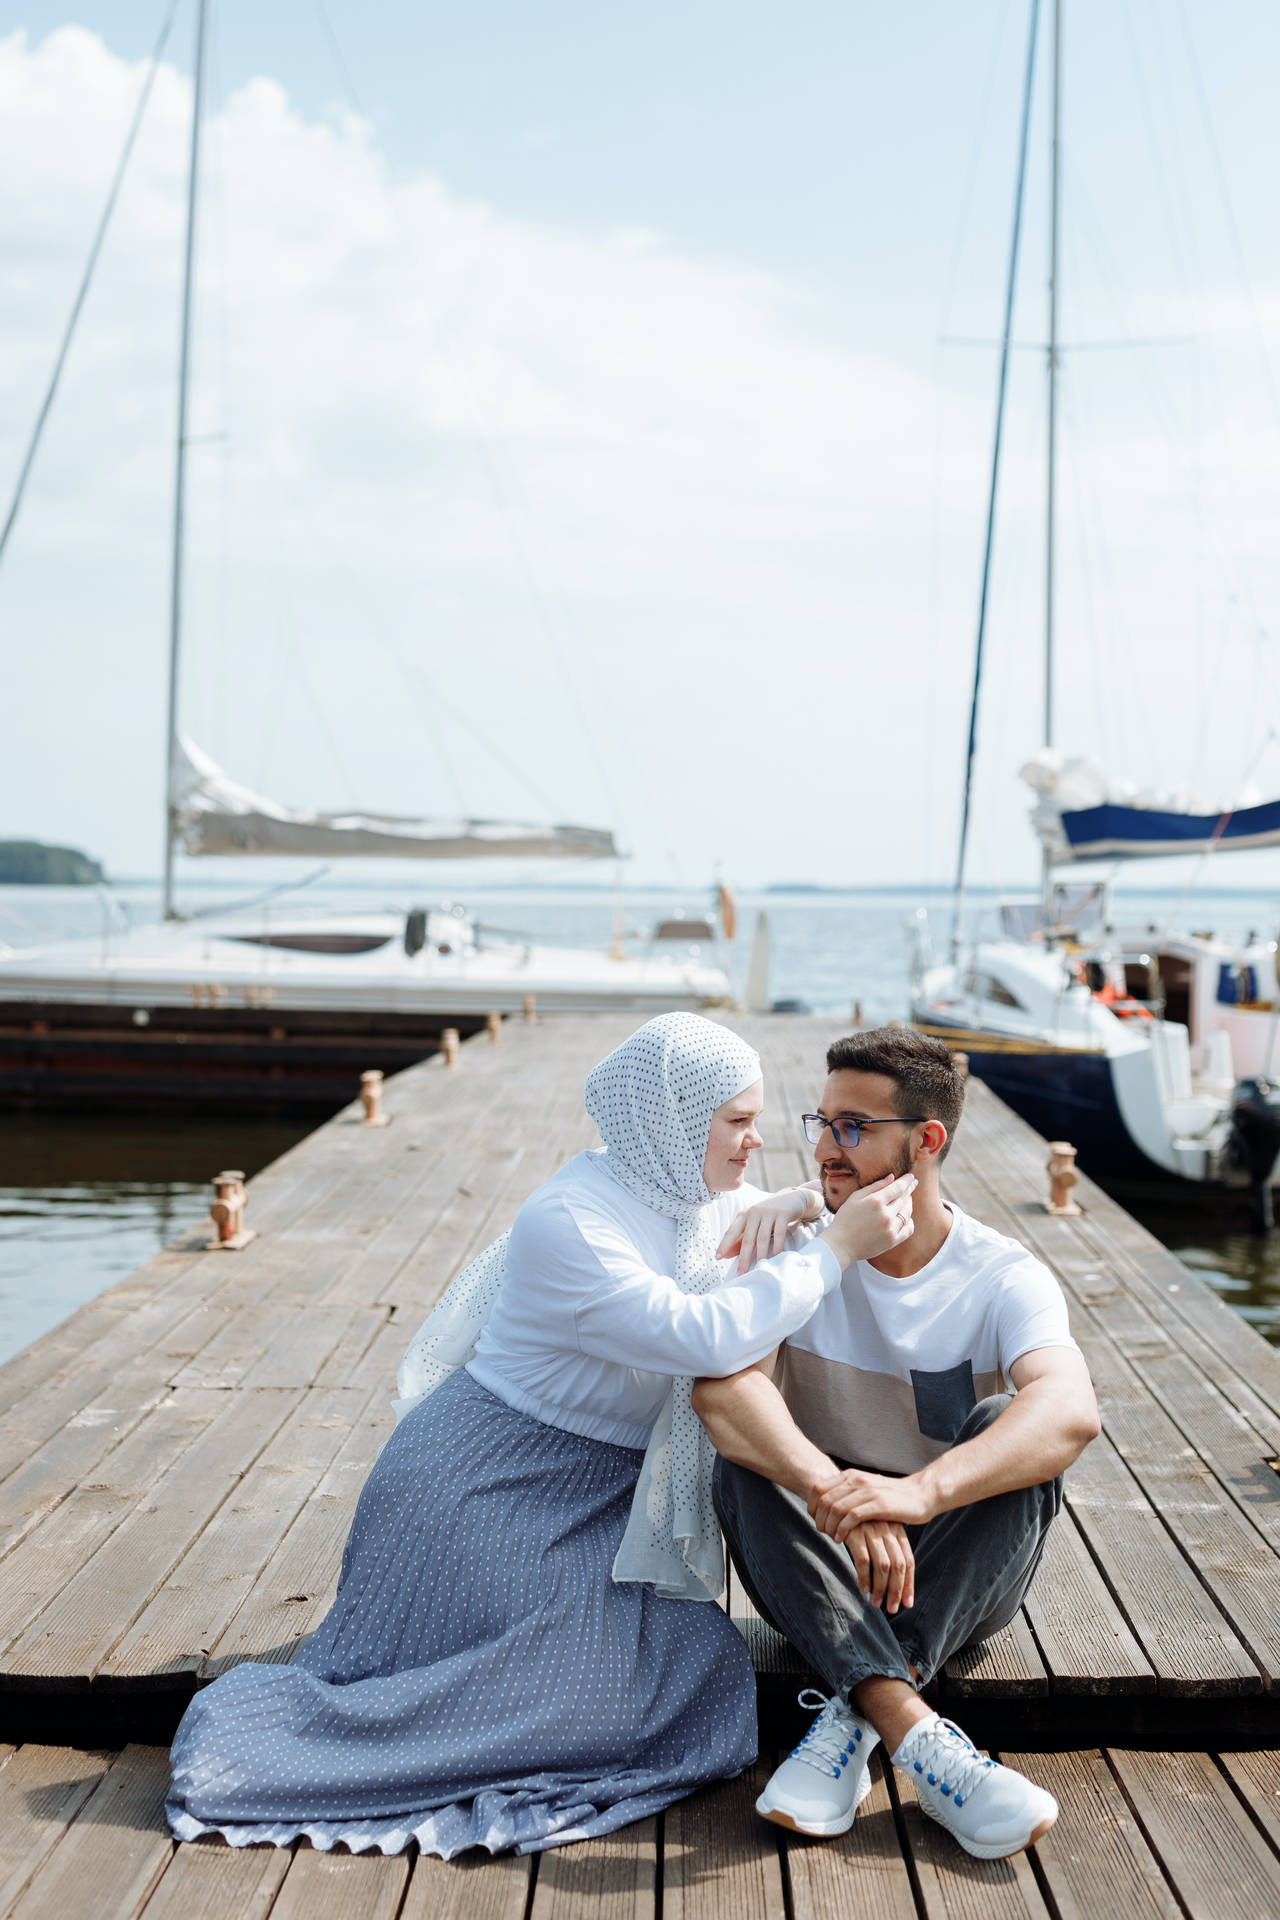 Muslim Couple On Wooden Dock